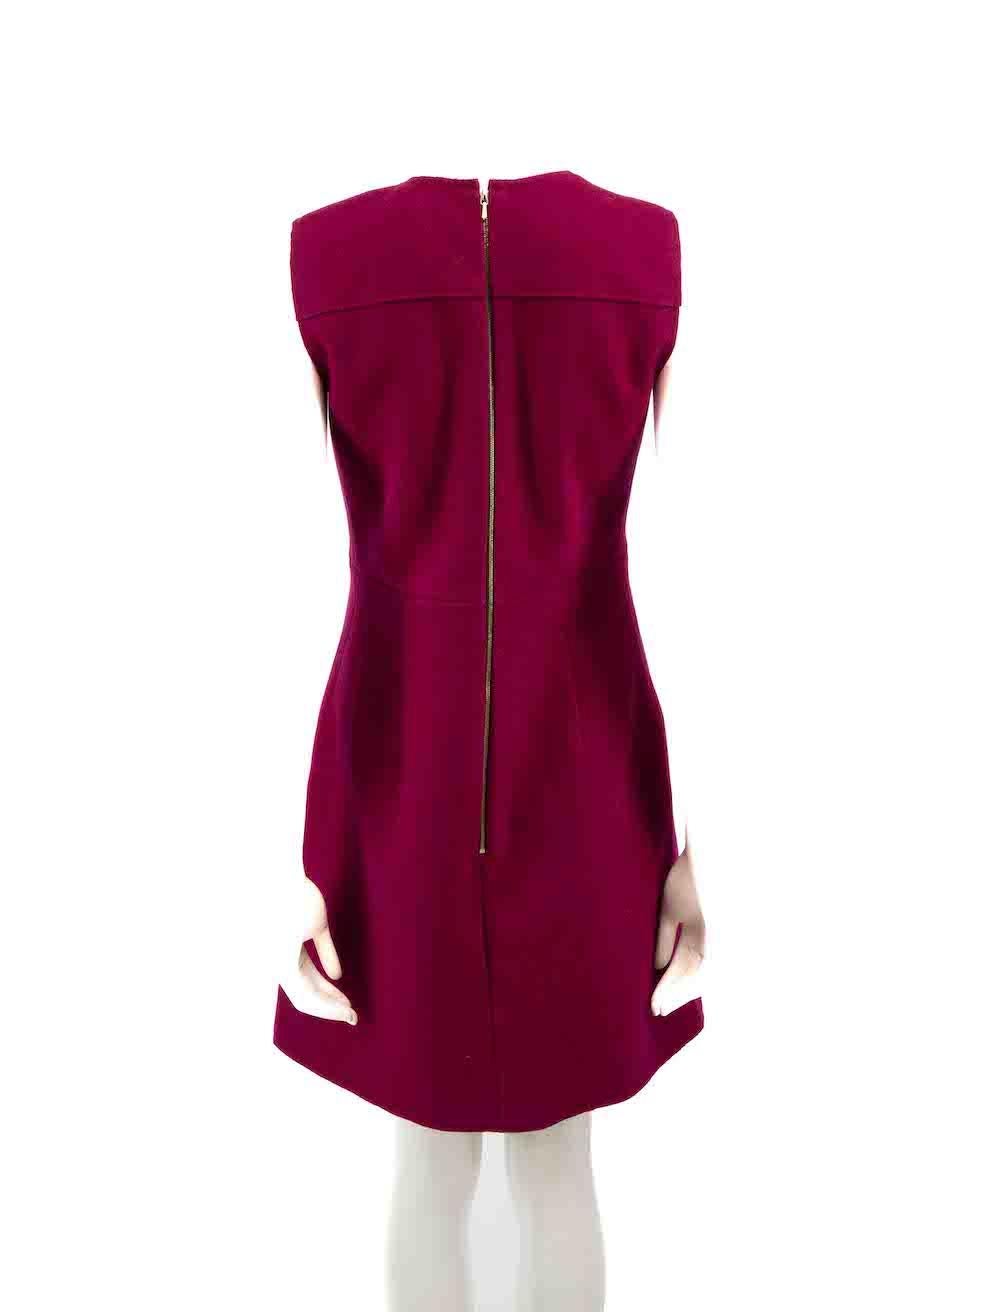 Victoria Beckham Purple Round Neck Mini Dress Size M In Good Condition For Sale In London, GB